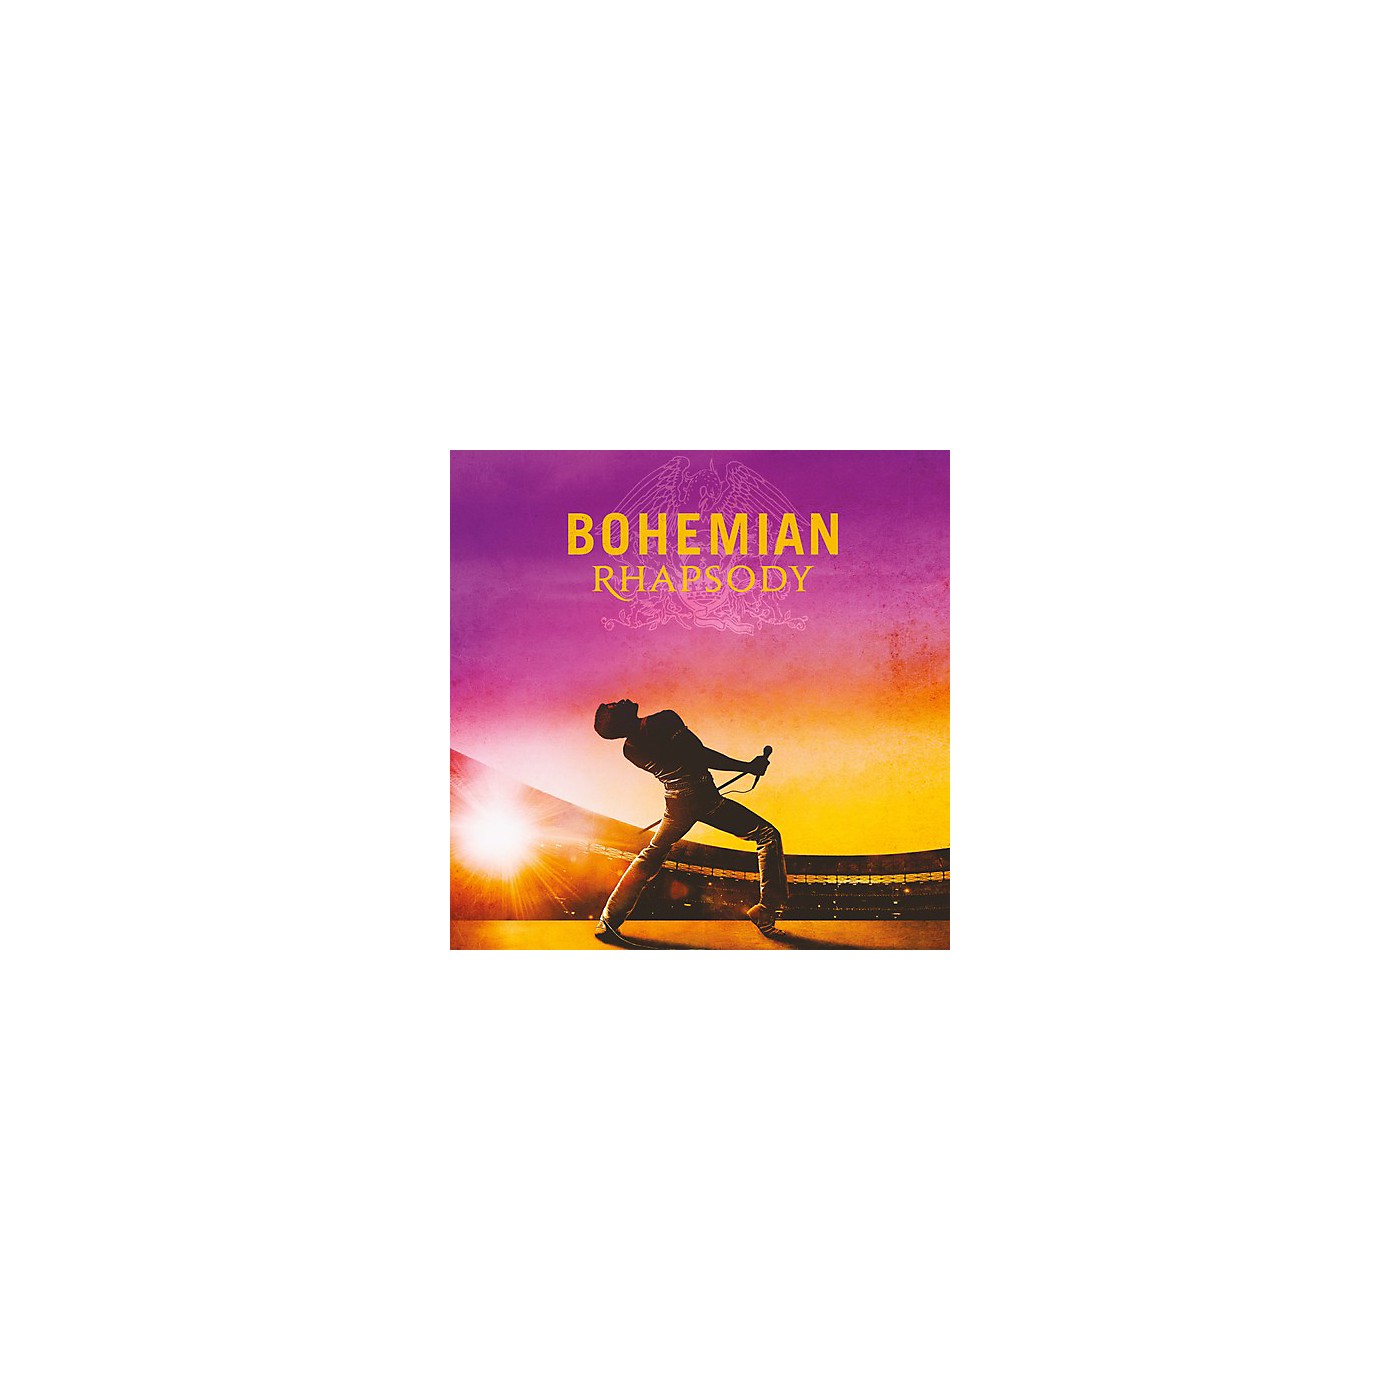 Alliance Queen - Bohemian Rhapsody (Original Motion Picture Soundtrack) (CD) thumbnail